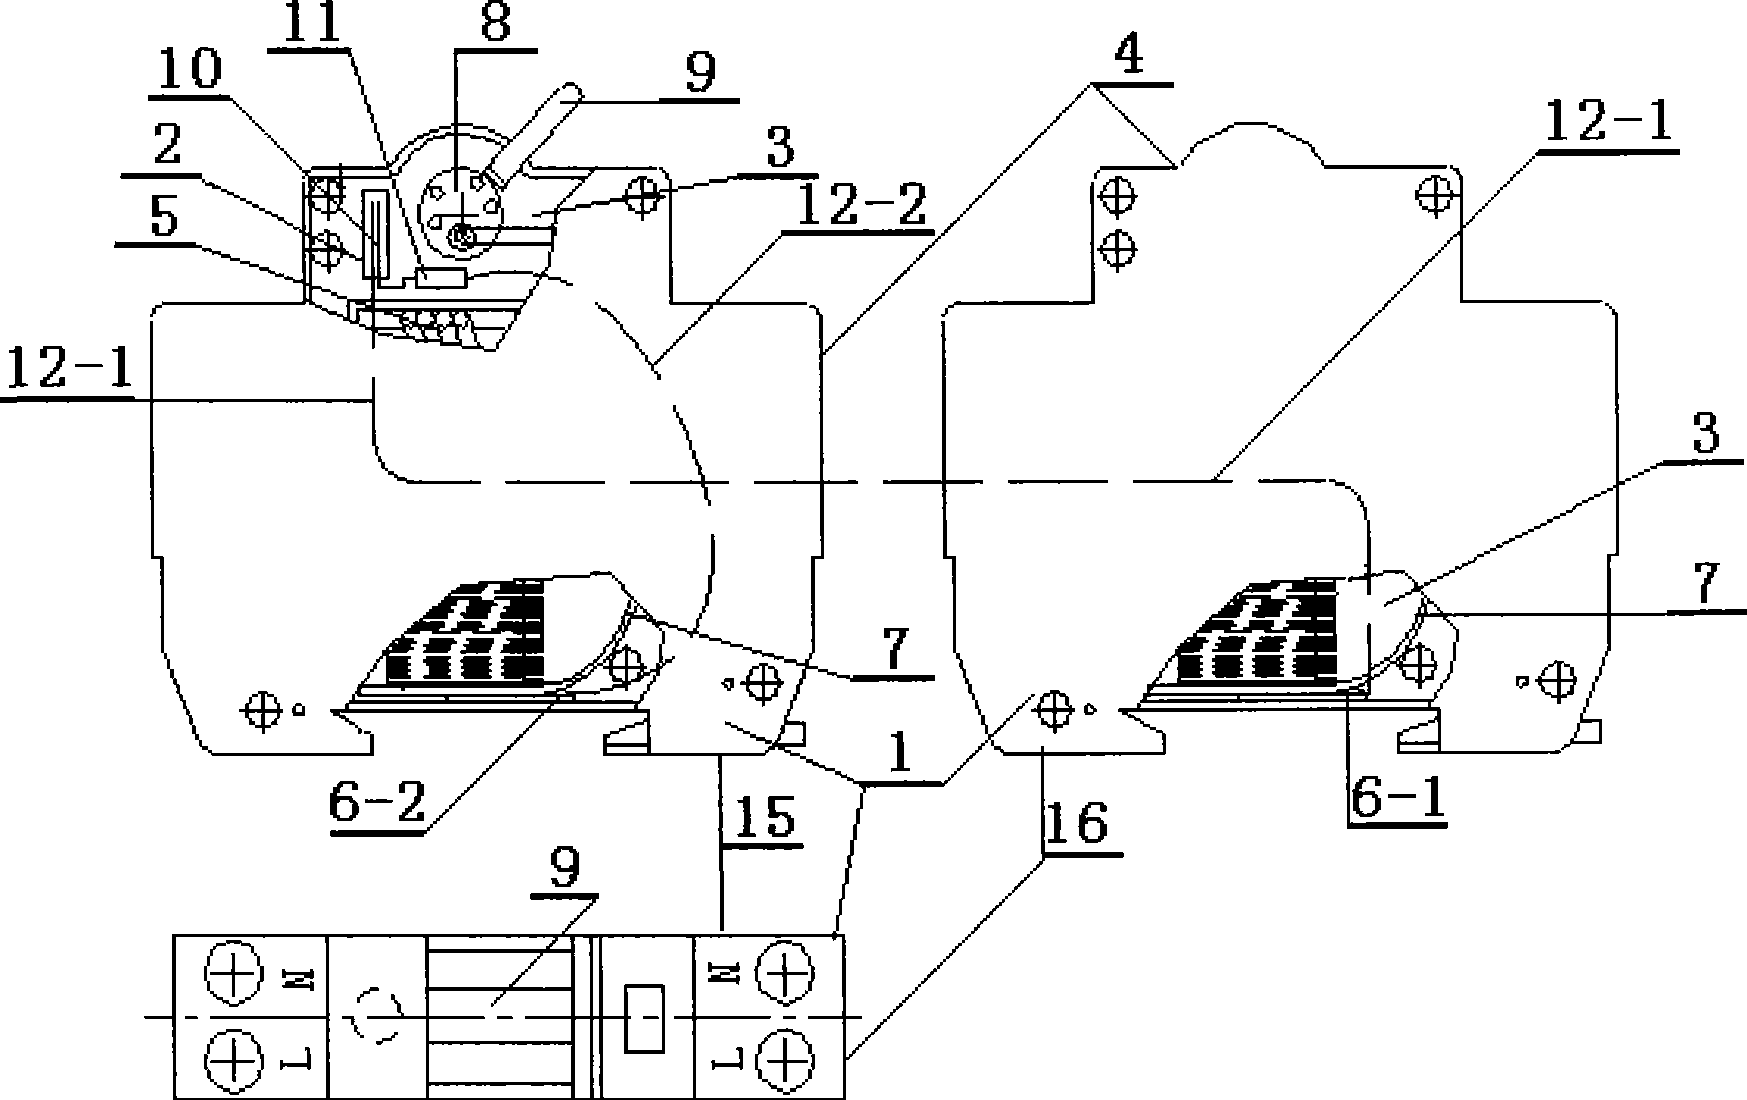 Minitype breaker capable of indicating operating status employing lamplight